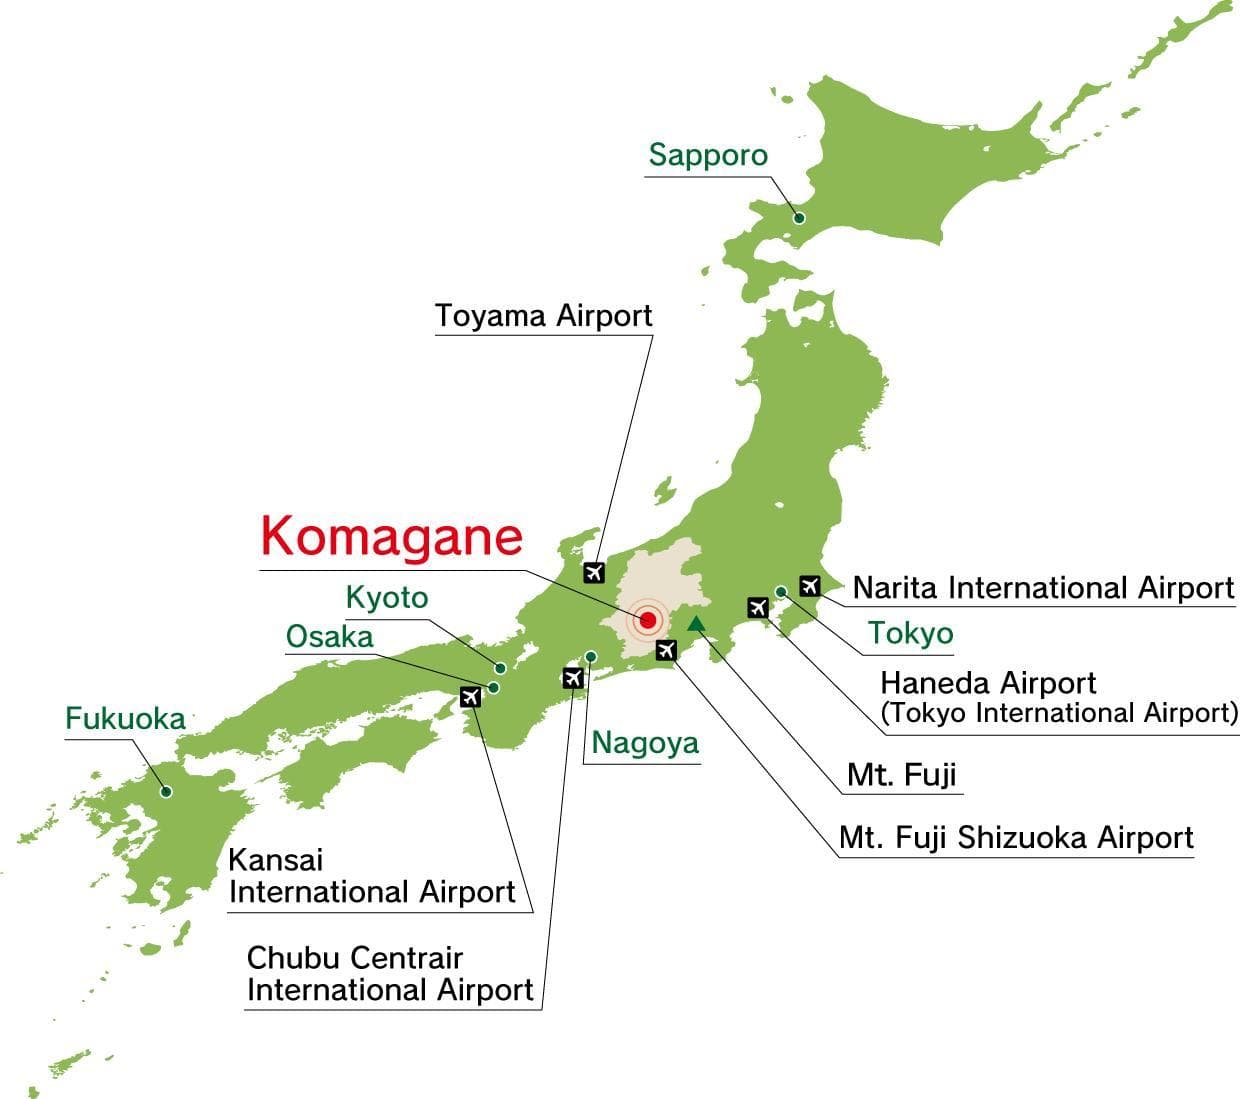 Japan Airport maps - Getting SIM card at Japan Airports